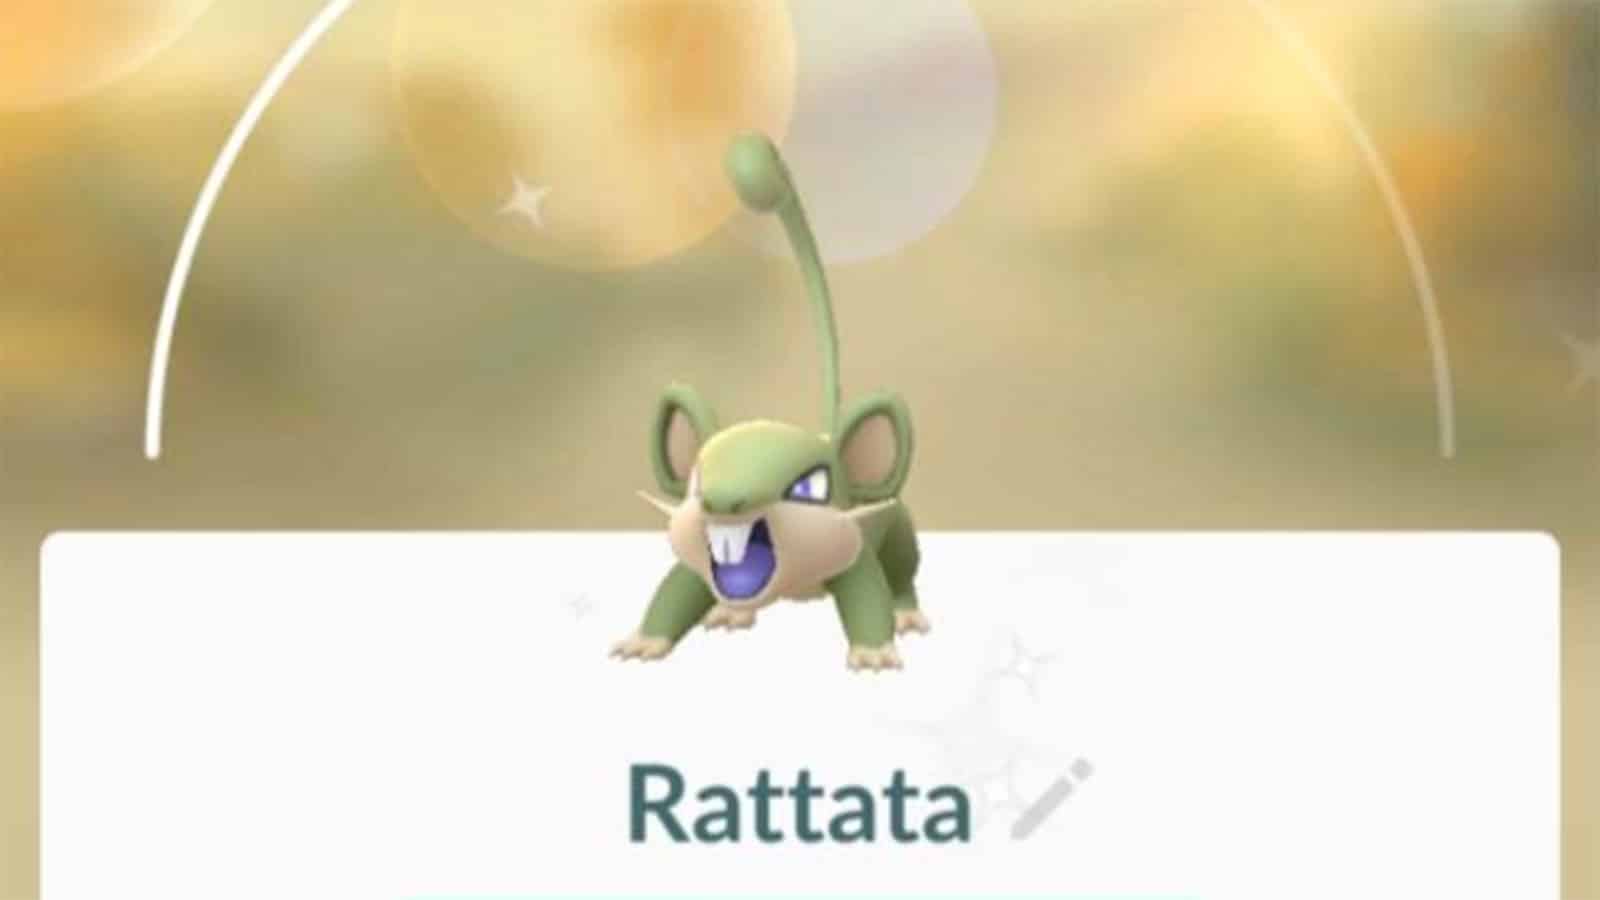 Shiny Rattata appearing in Pokemon Go